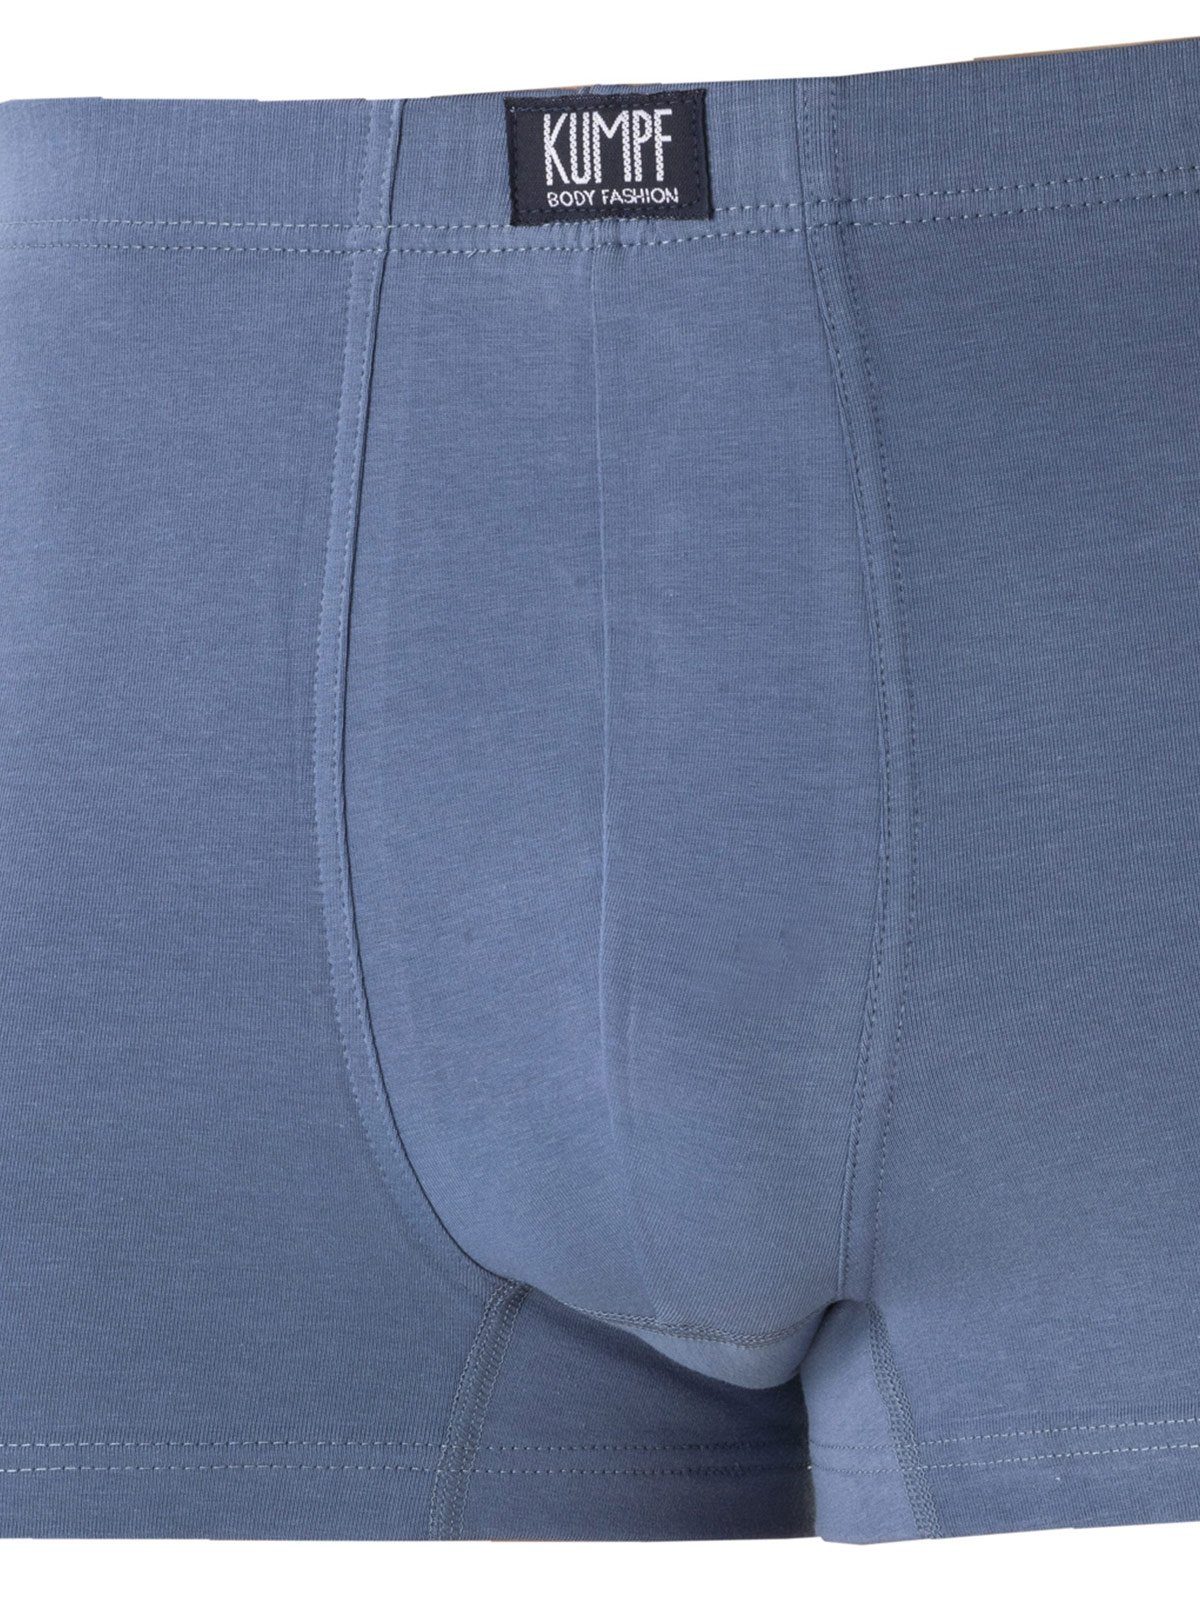 KUMPF (Stück, Pants Markenqualität 1-St) stahl Herren Cotton Bio Pants Retro hohe